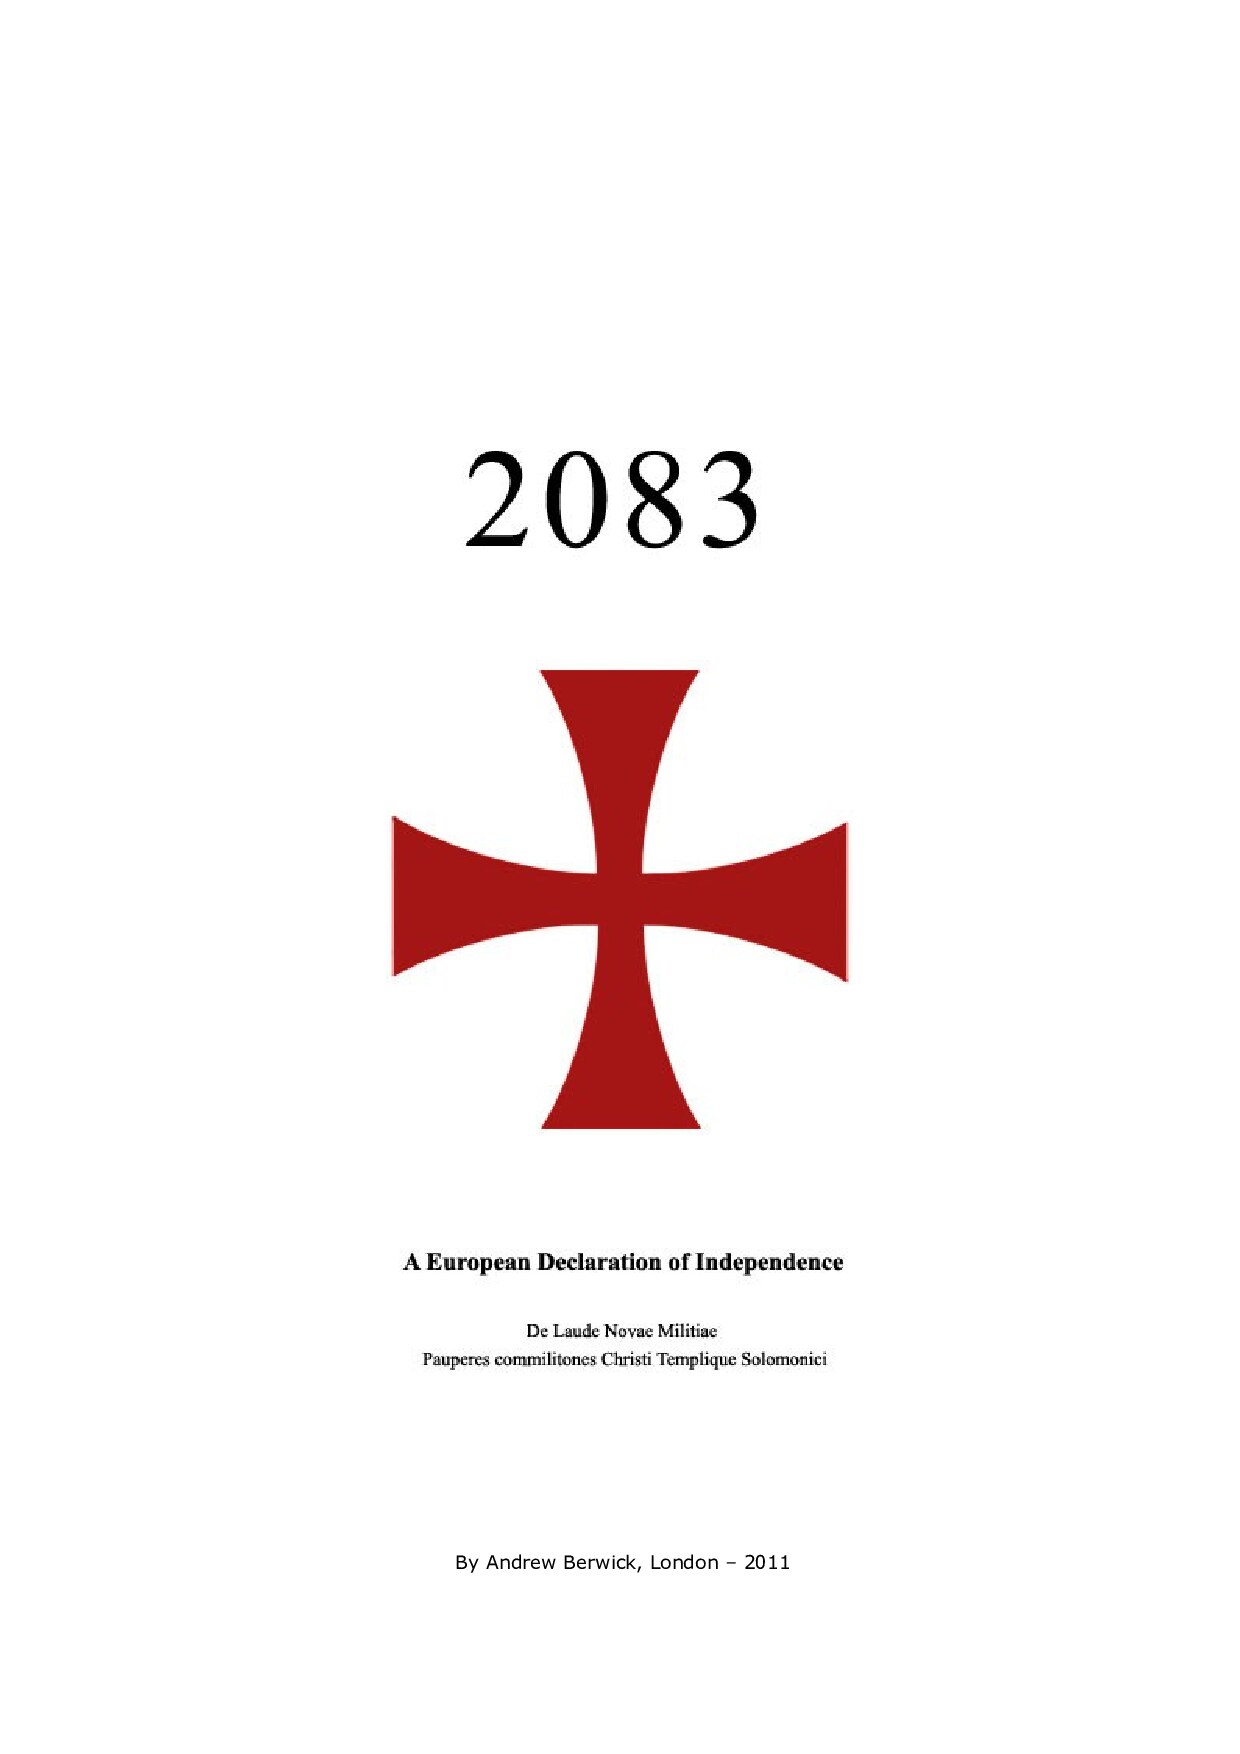 Breivik, Anders Behring; 2083 - A European Declaration of Independence